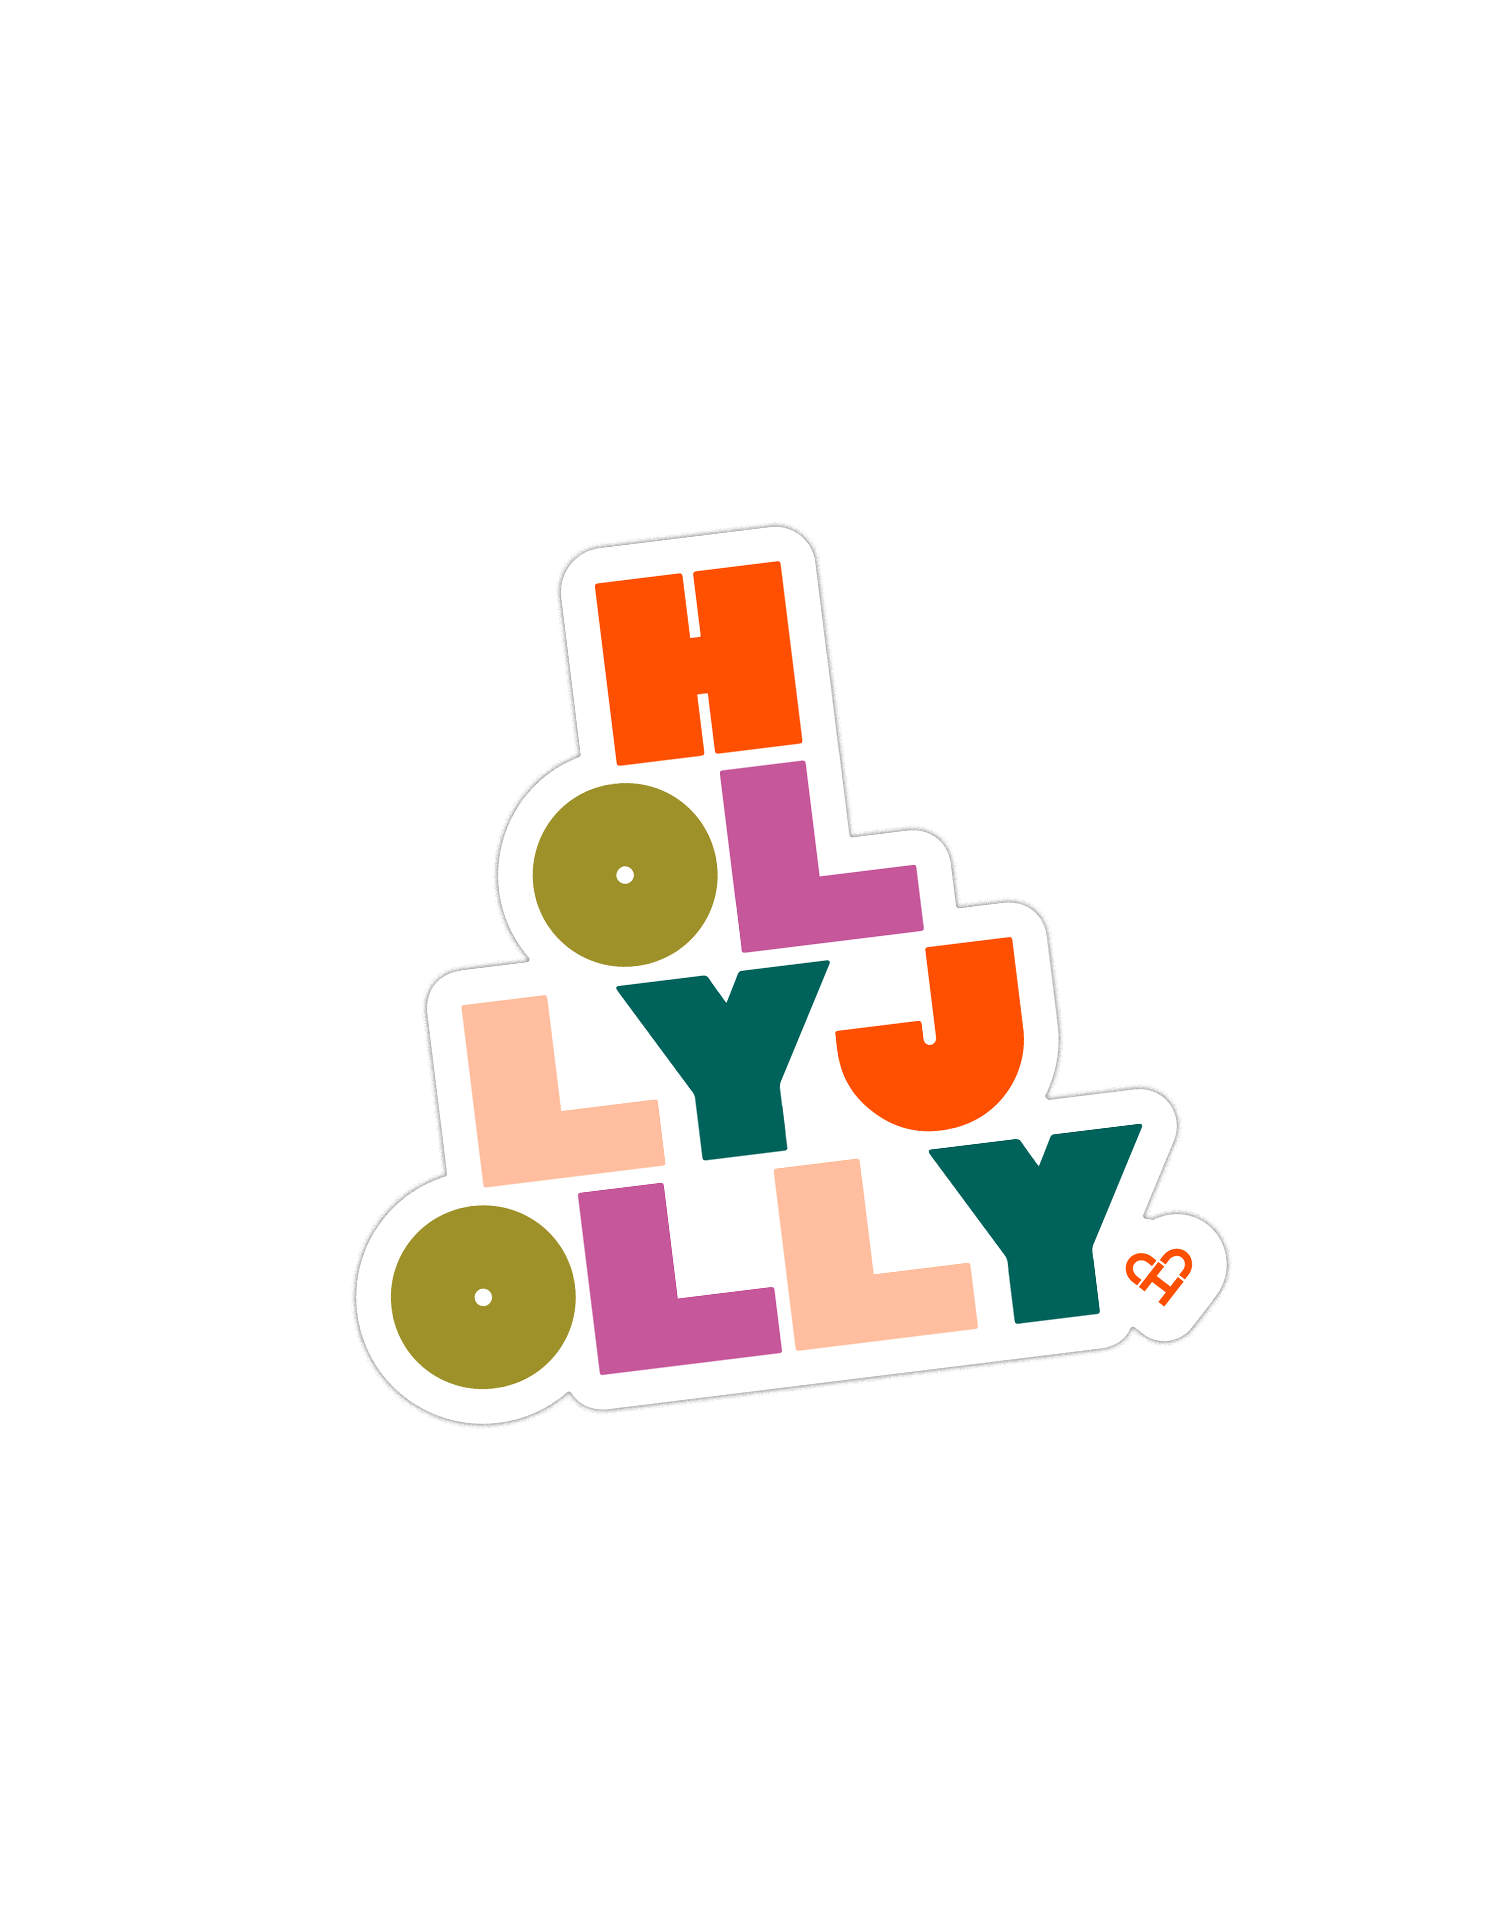 Holly Jolly Sticker